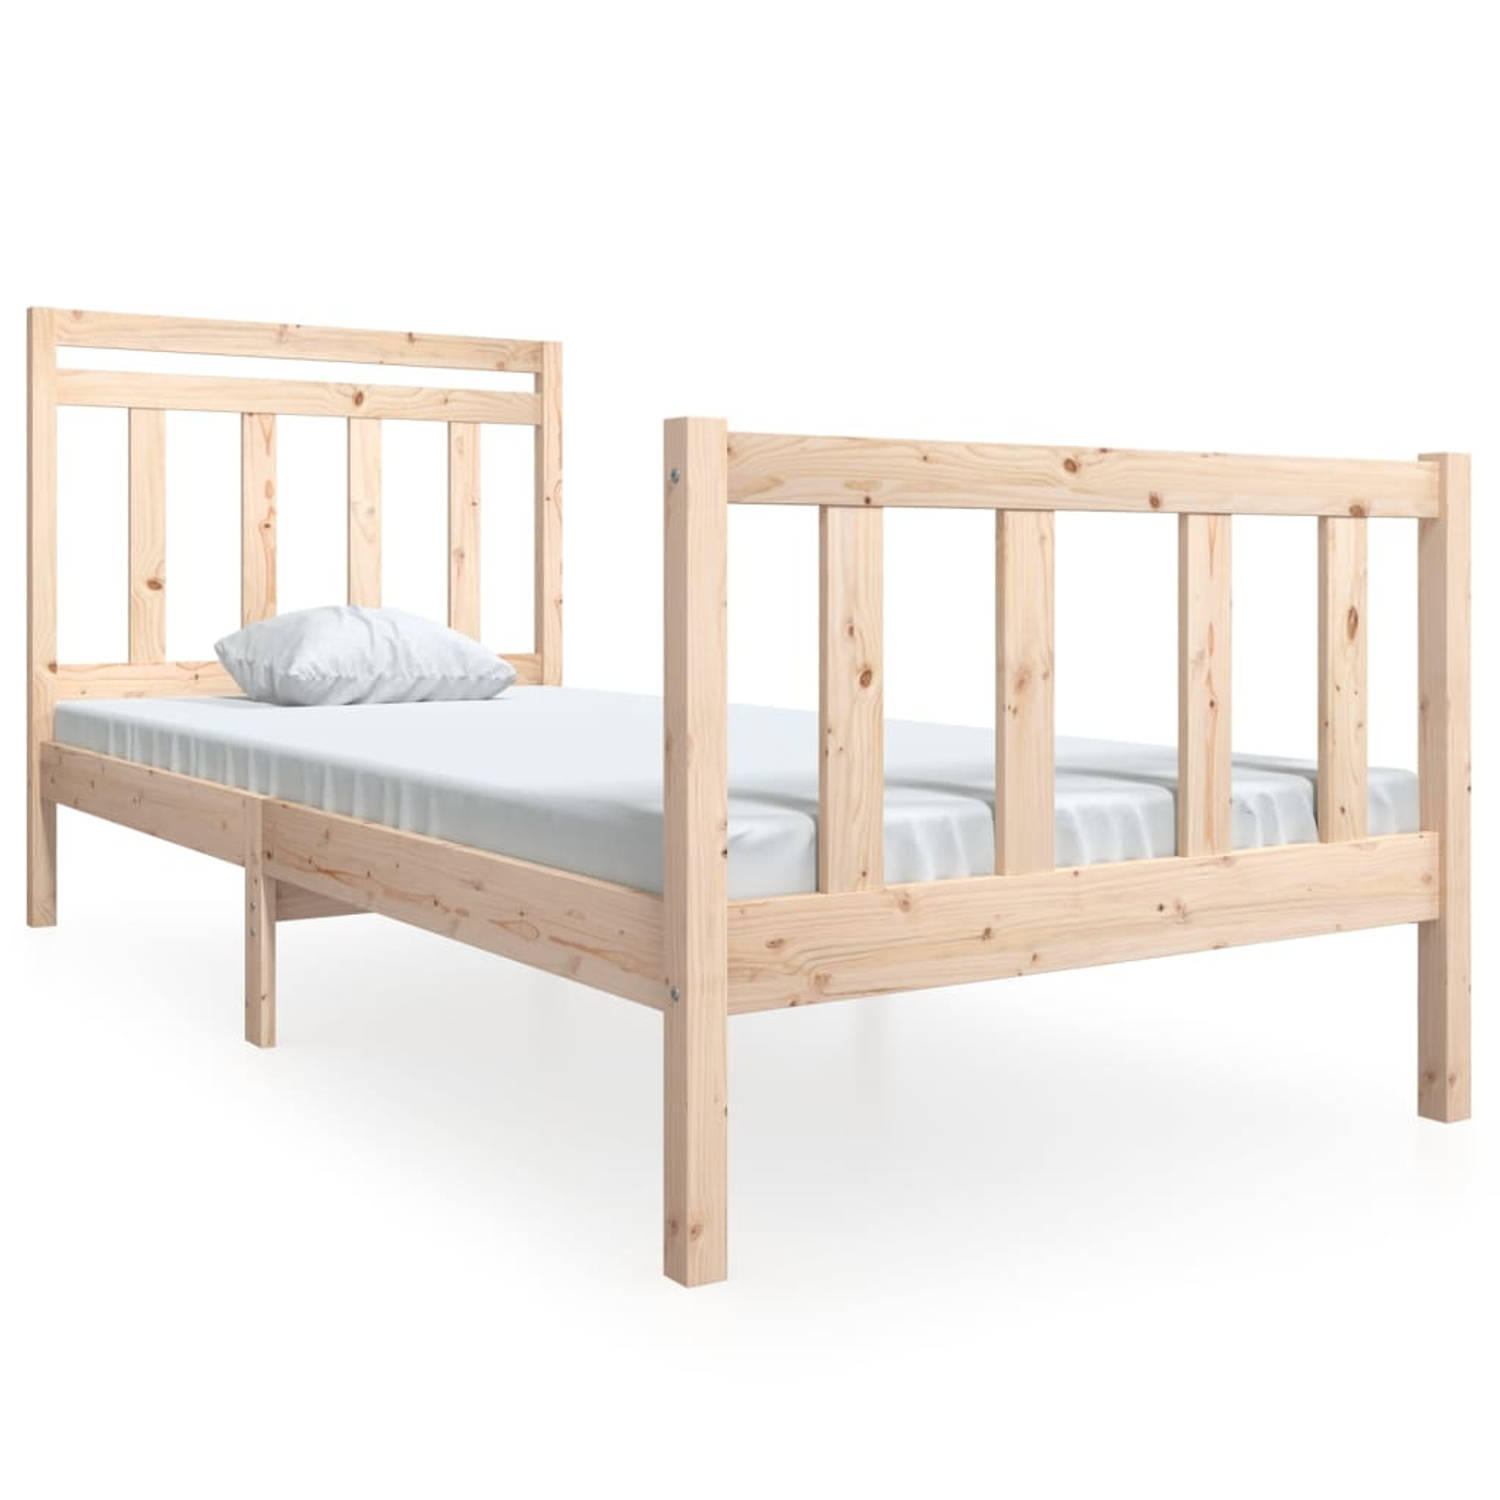 The Living Store Bedframe massief hout 90x200 cm - Bedframe - Bedframes - Eenpersoonsbed - Bed - Bedombouw - Frame - Bed Frame - Ledikant - Bedframe Met Hoofdeinde - Eenpersoonsbed